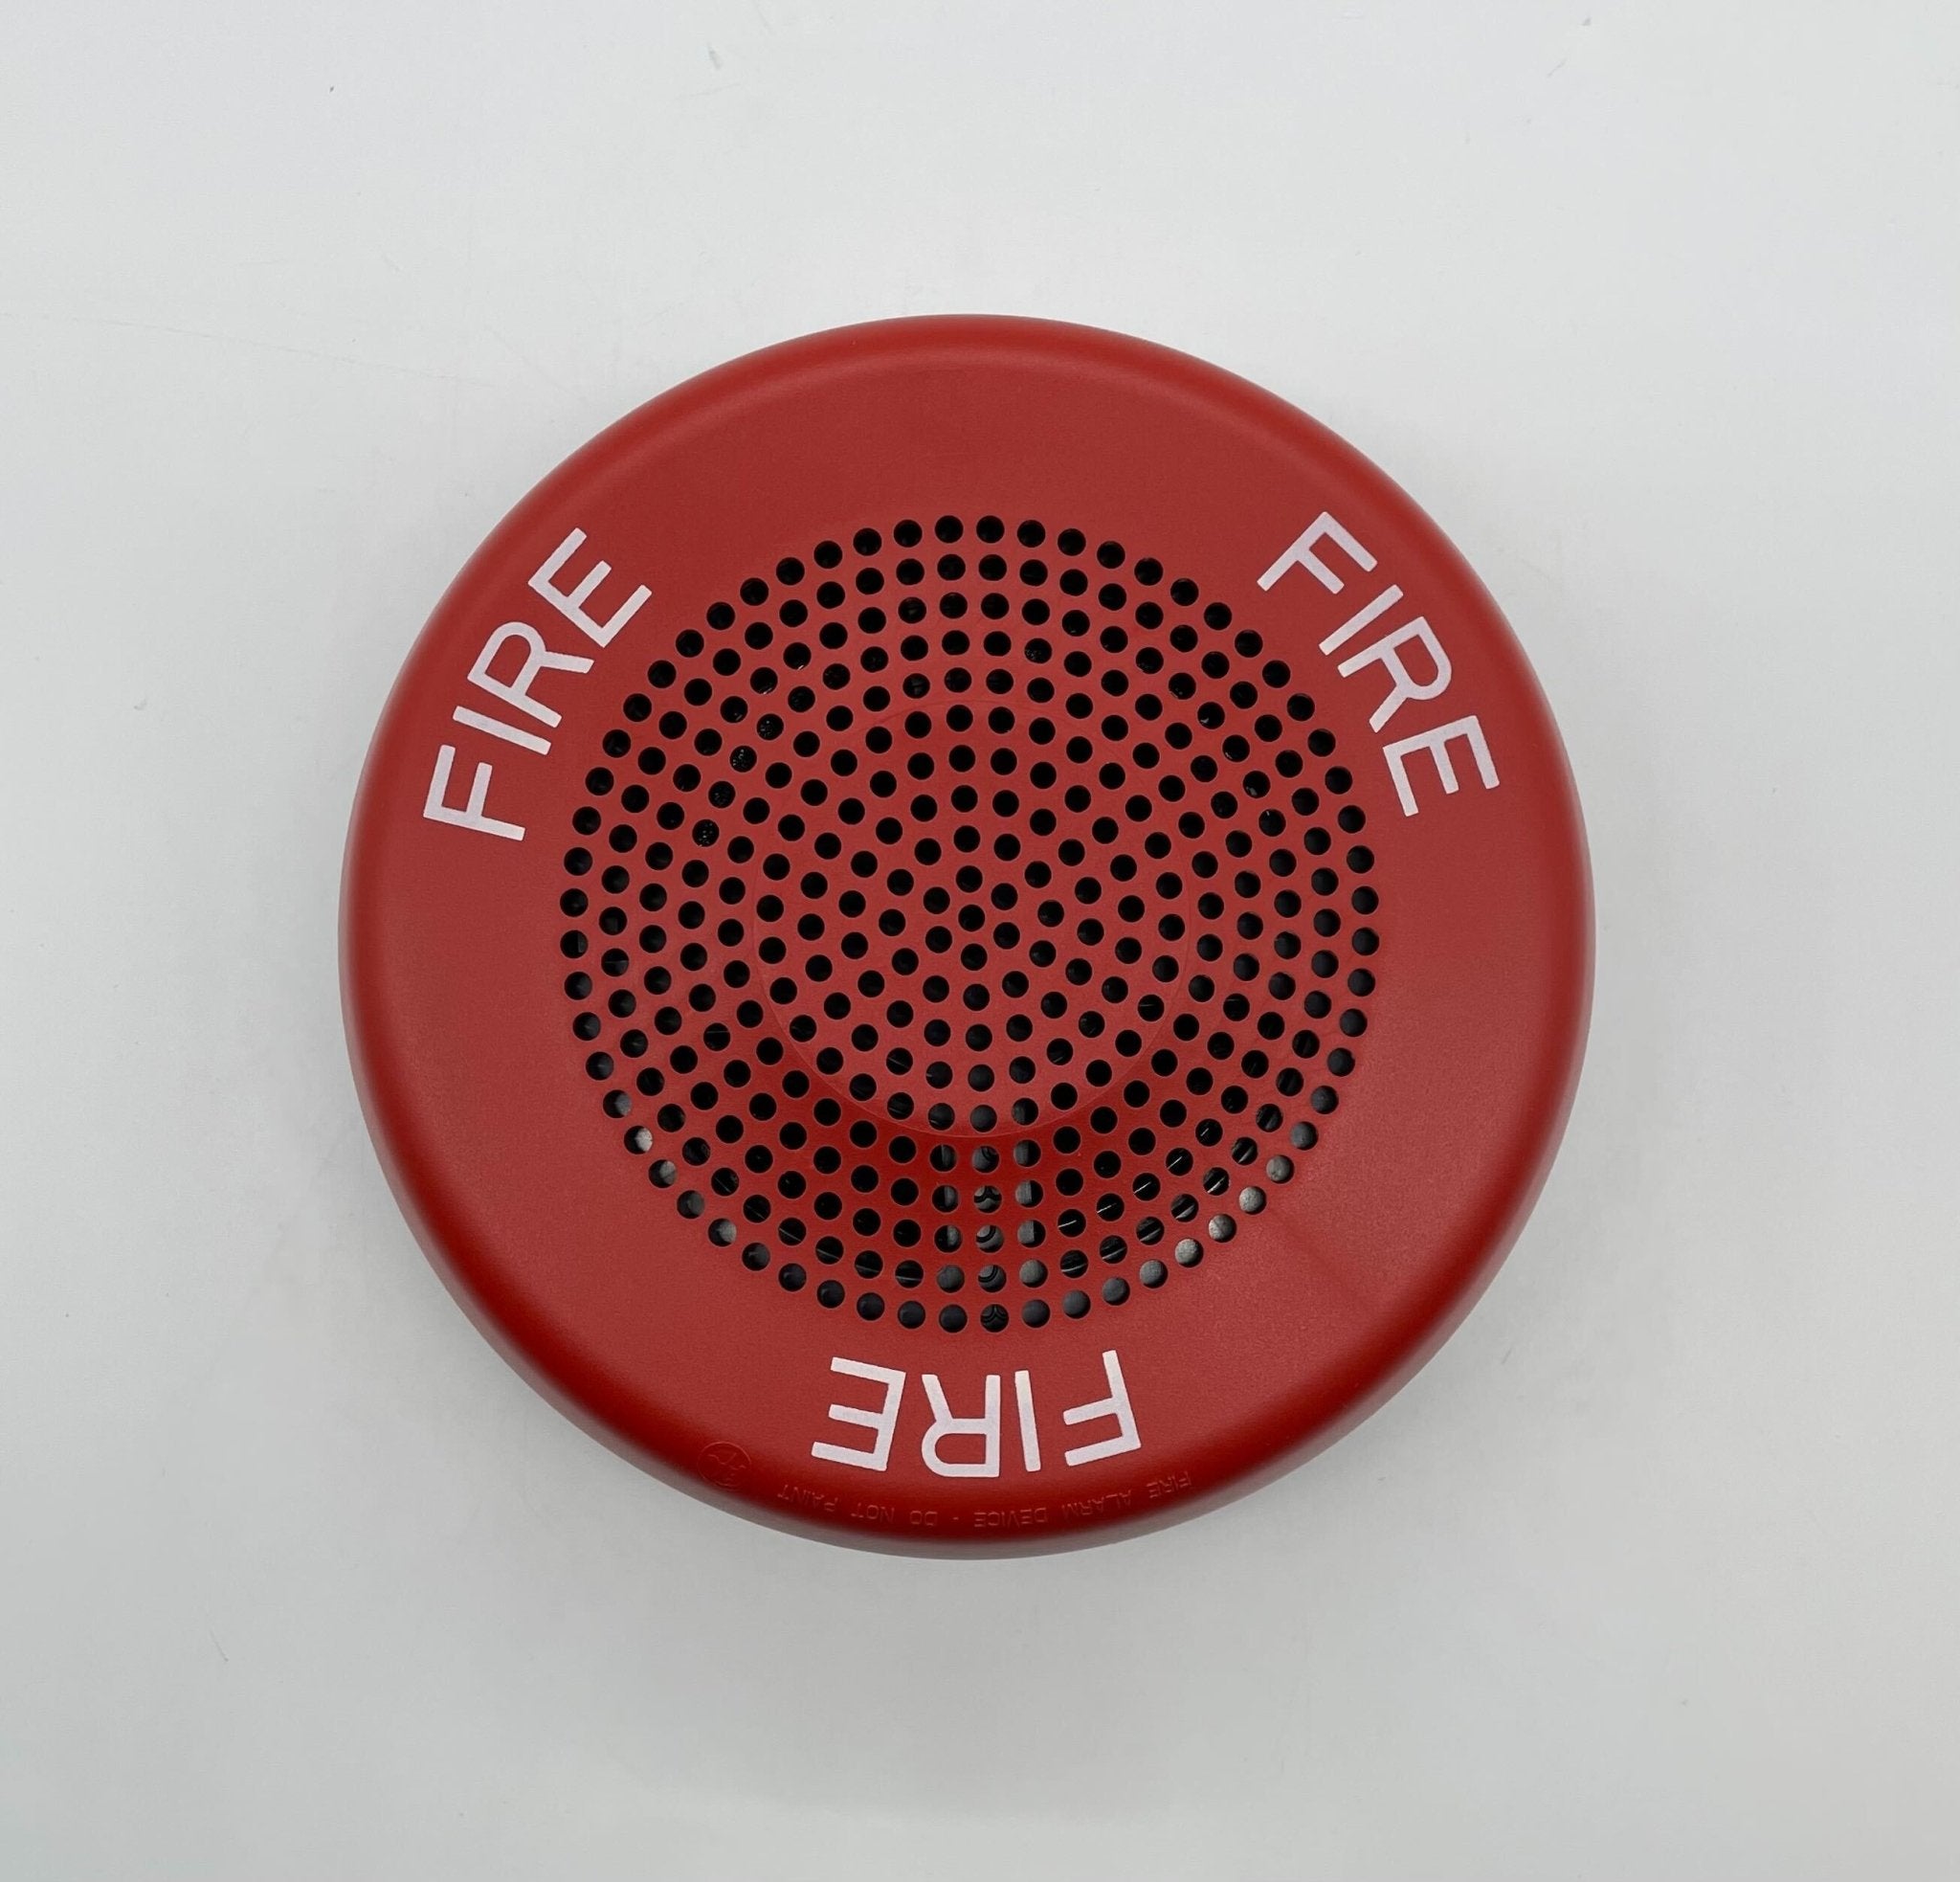 Wheelock ELFHNRC - The Fire Alarm Supplier